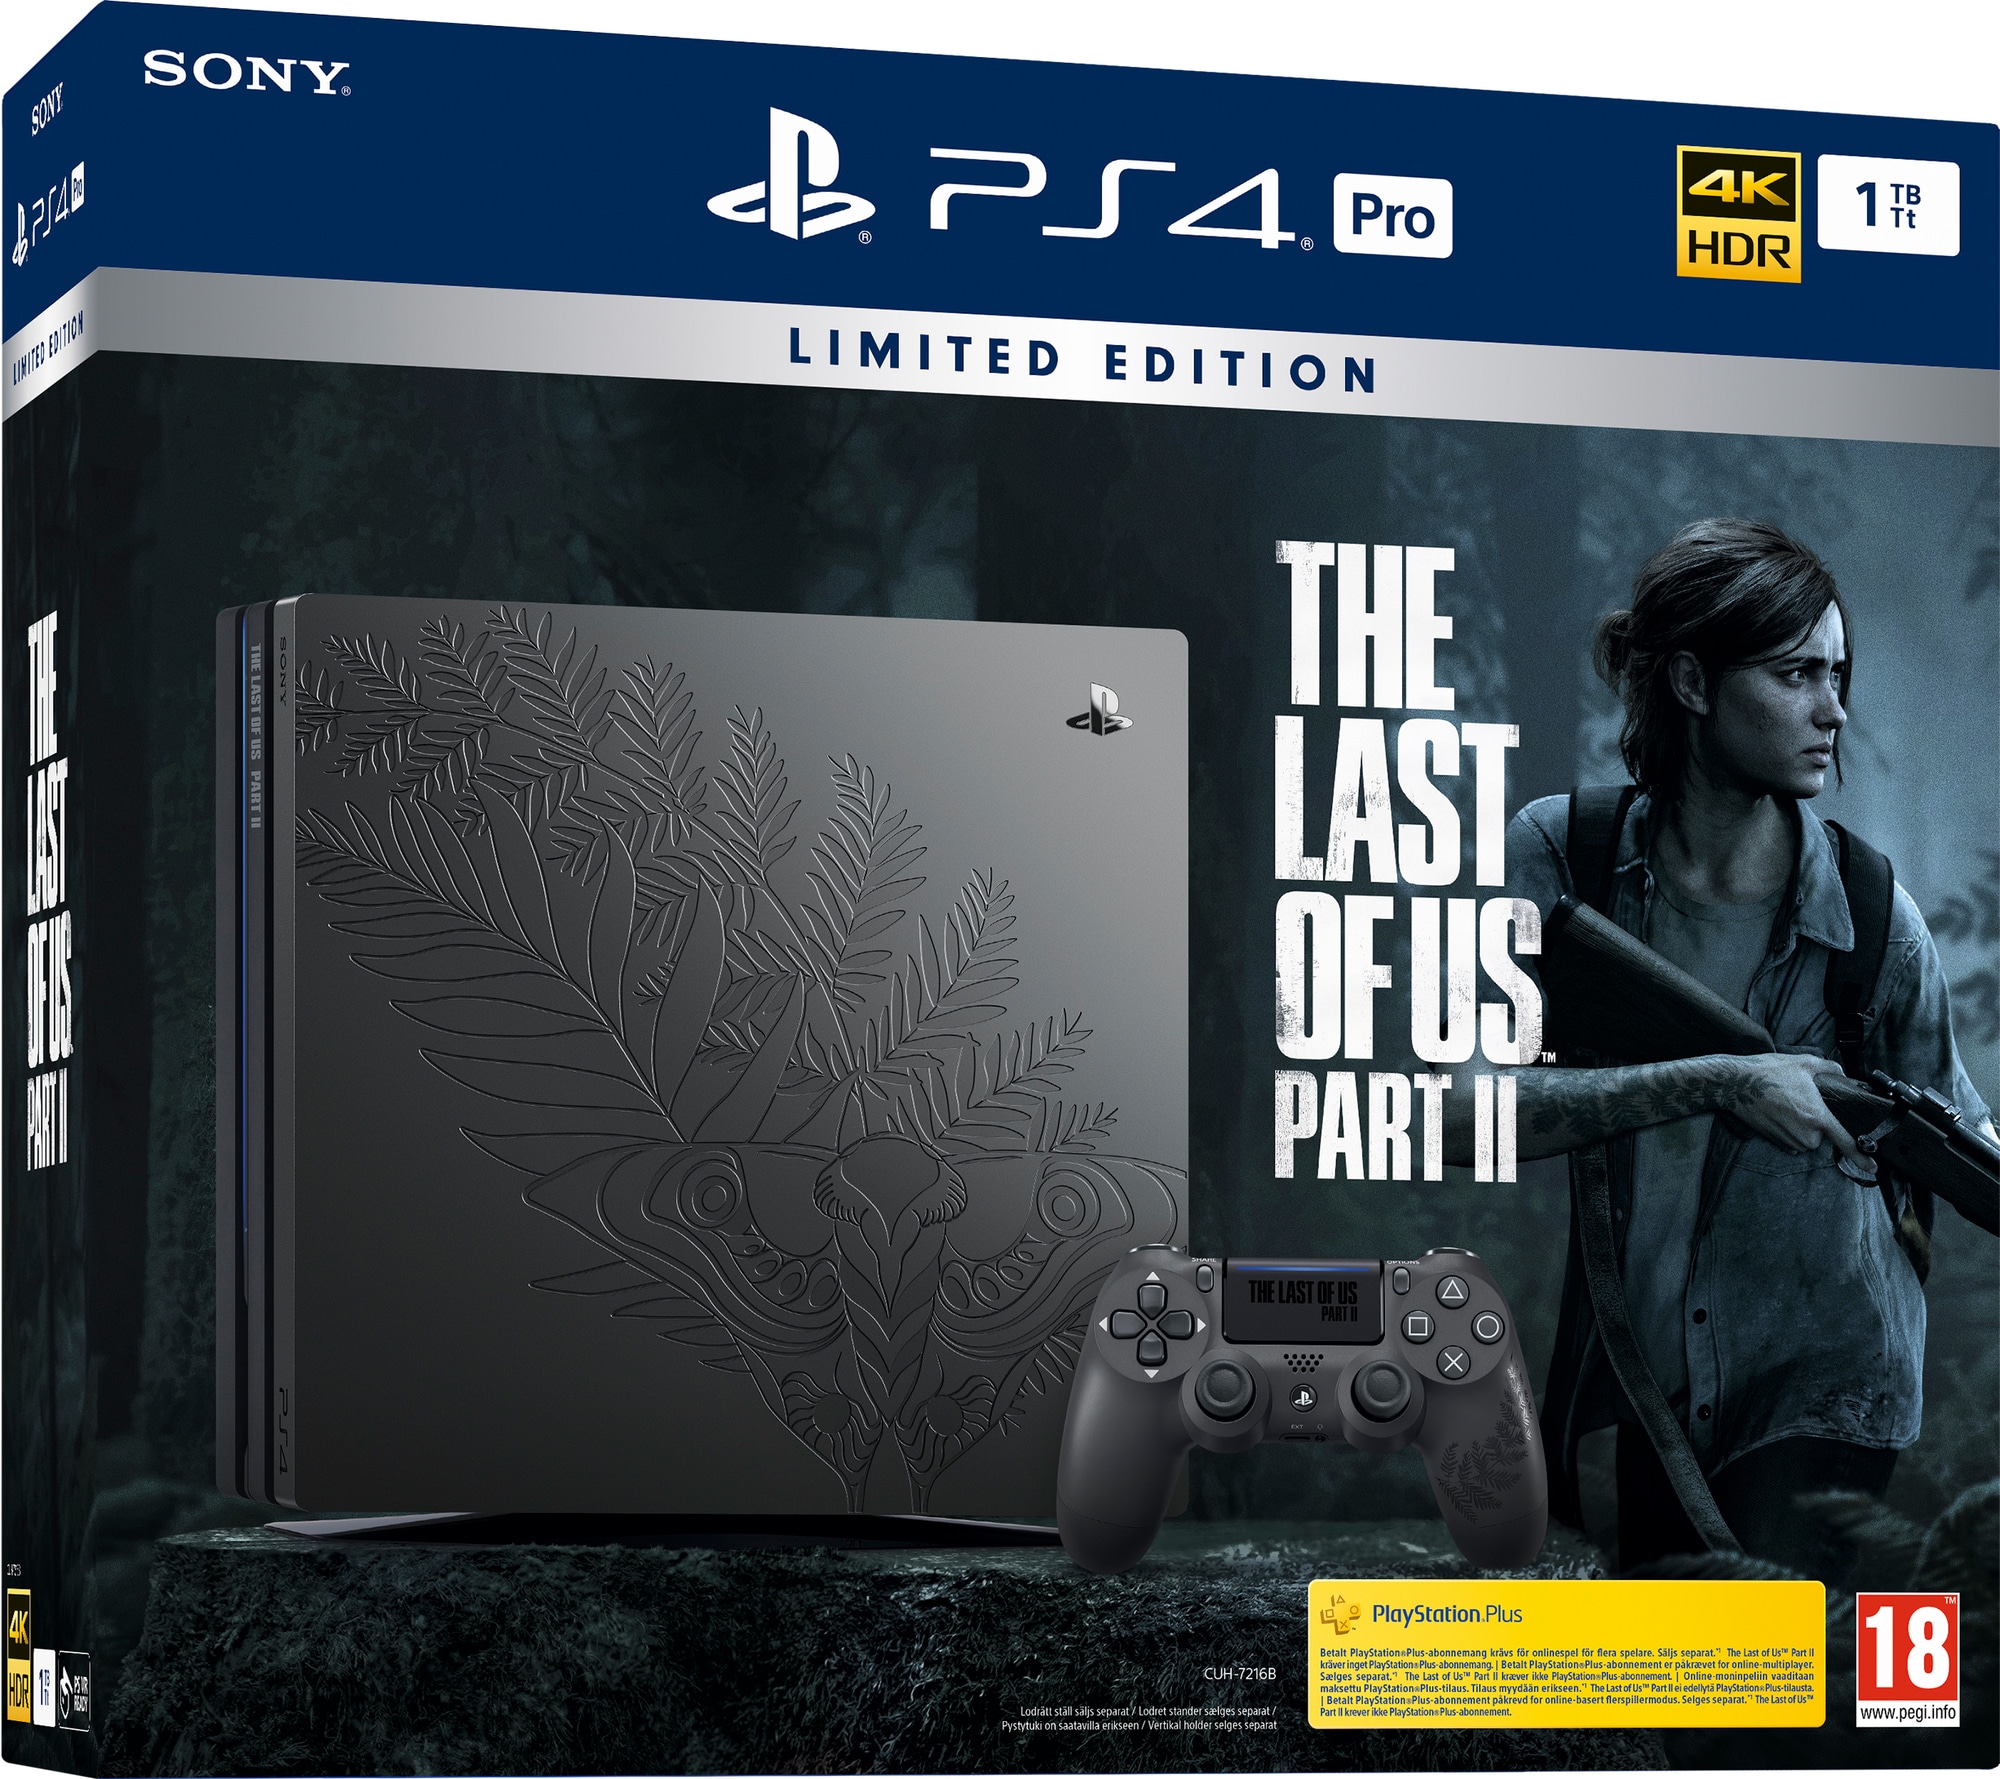 insekt Afgang Mug PlayStation 4 Pro 1 TB: The Last of Us Part II limited edition | Elgiganten